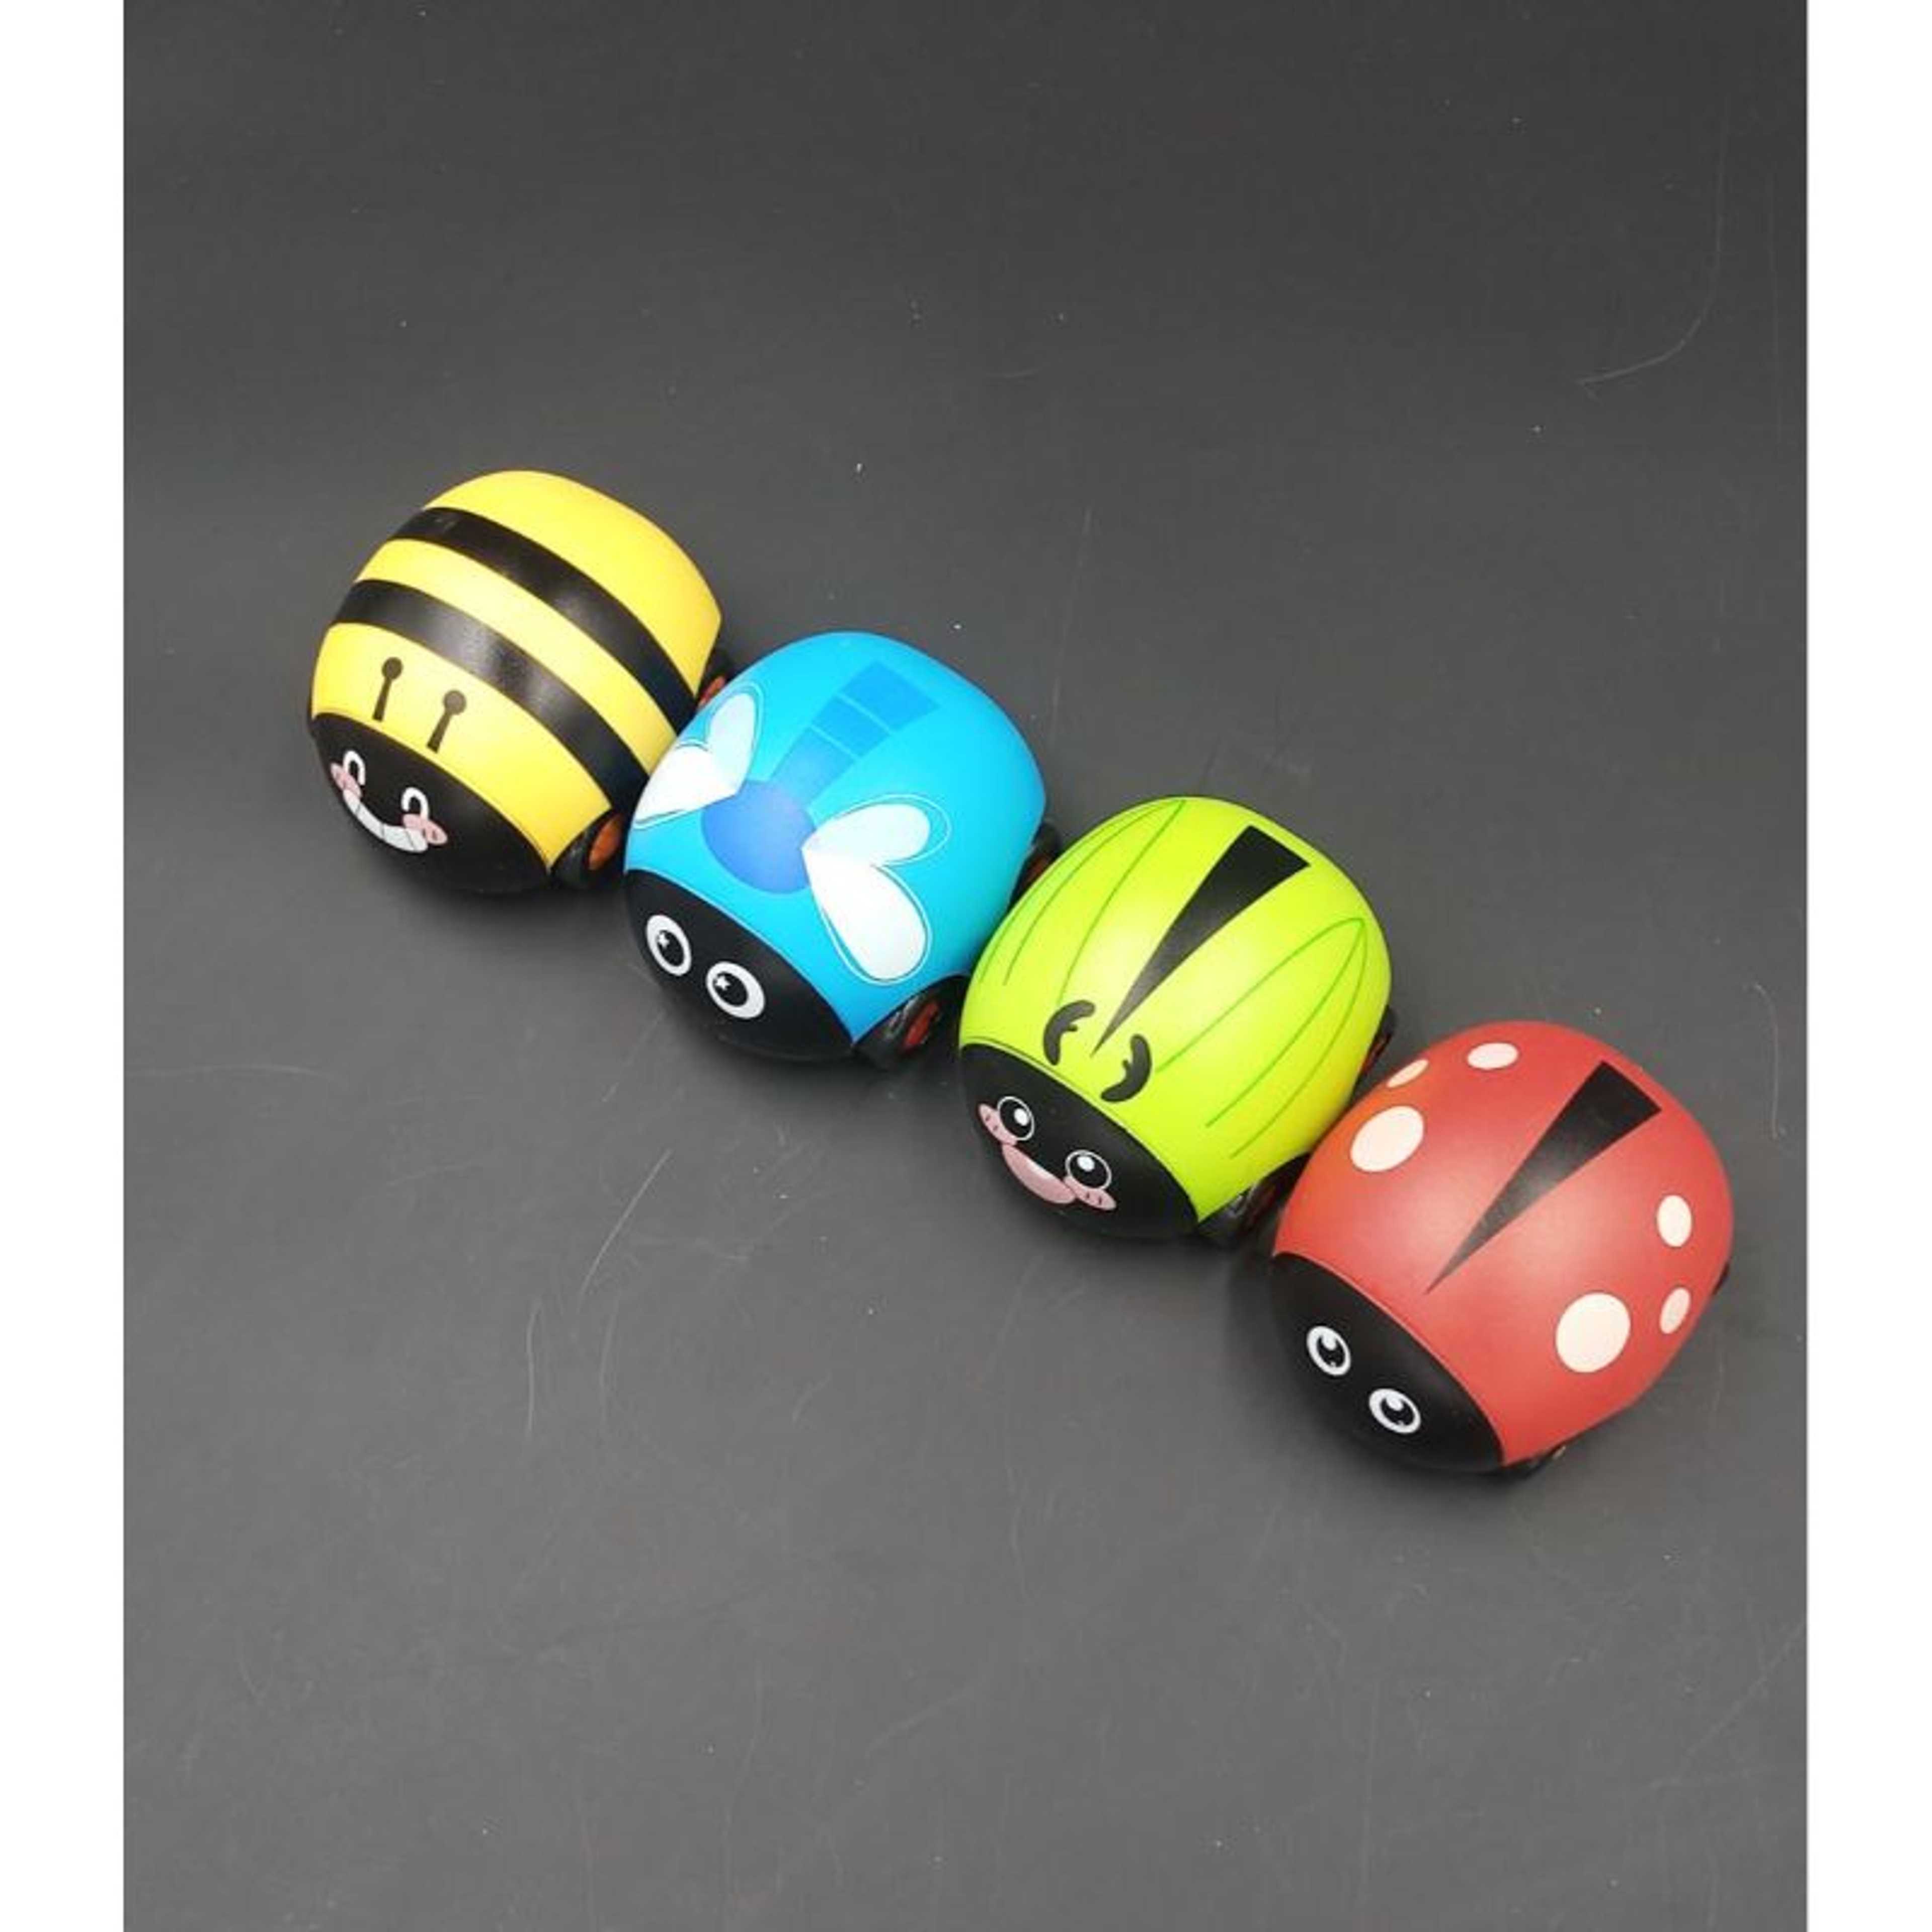 Beetle Design Push-back Car - 1 piece